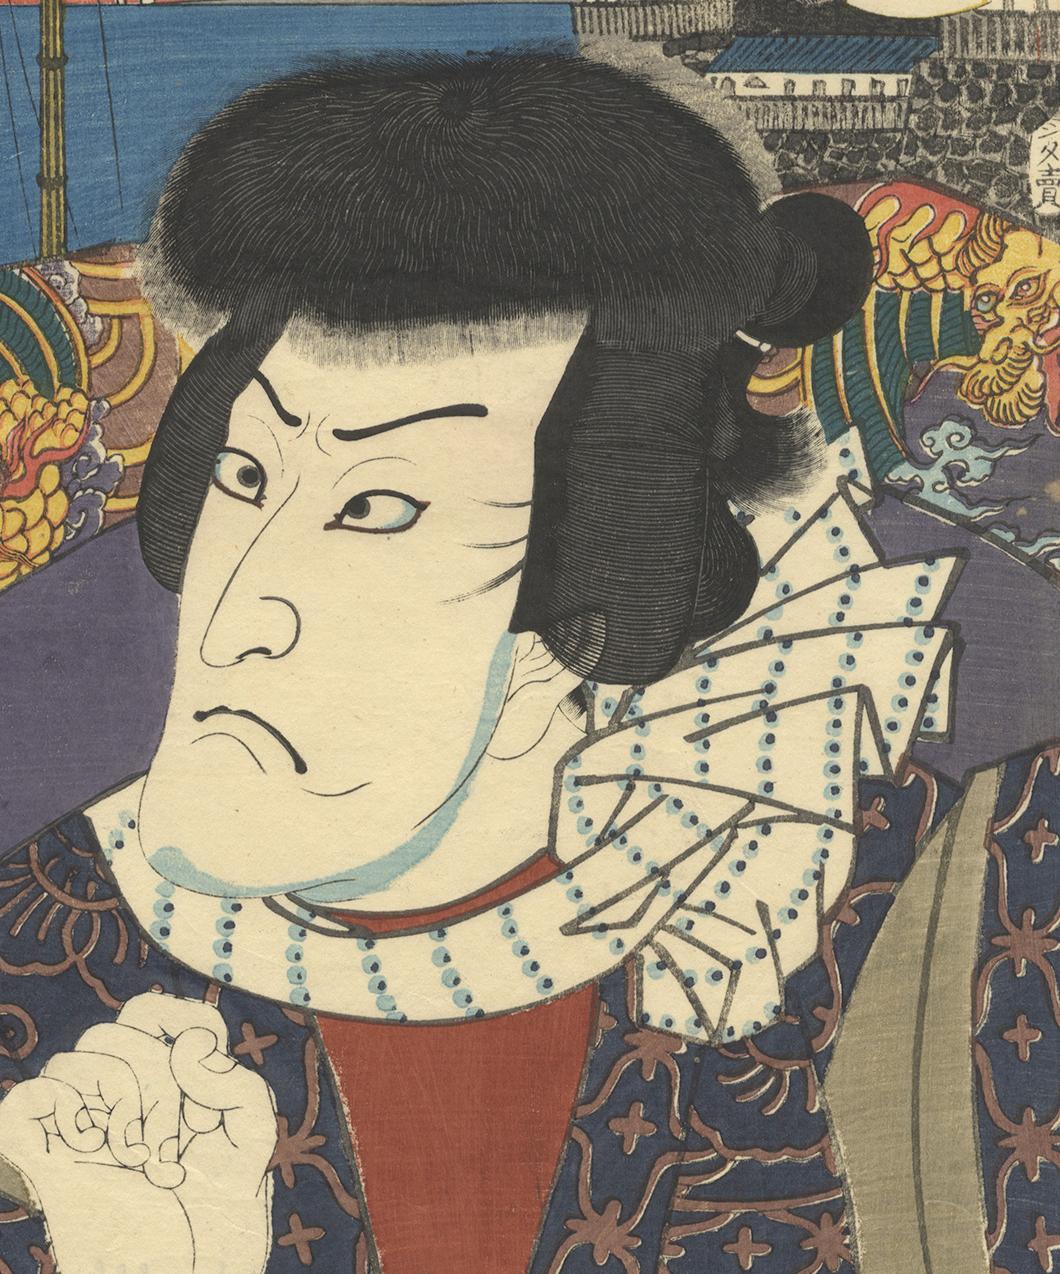 Kunisada Utagawa (1786-1865)
Title: 43. Kuwana, Tokuzo from the Kabuki play
Series: The Fifty-Three Stations of the Tōkaidō
Publisher: Izutsu-ya Shokichi
Date: 1852
Dimensions: 25 x 36.2 cm
Condition: Tape residue from previous mounting. Some